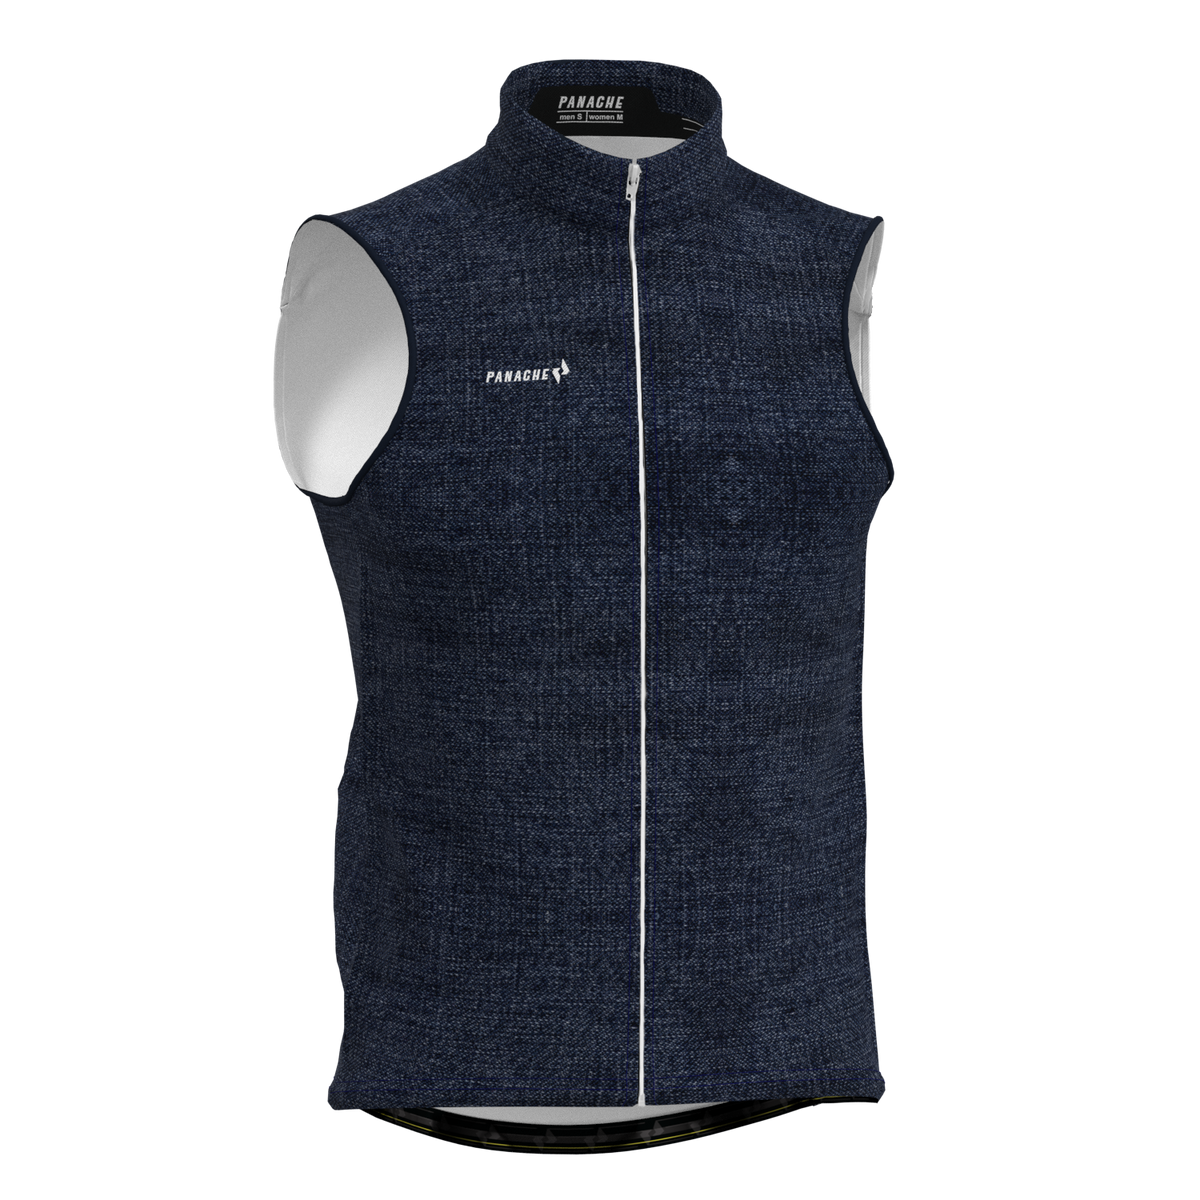 Jackets & Vests - Panache Cyclewear Co.